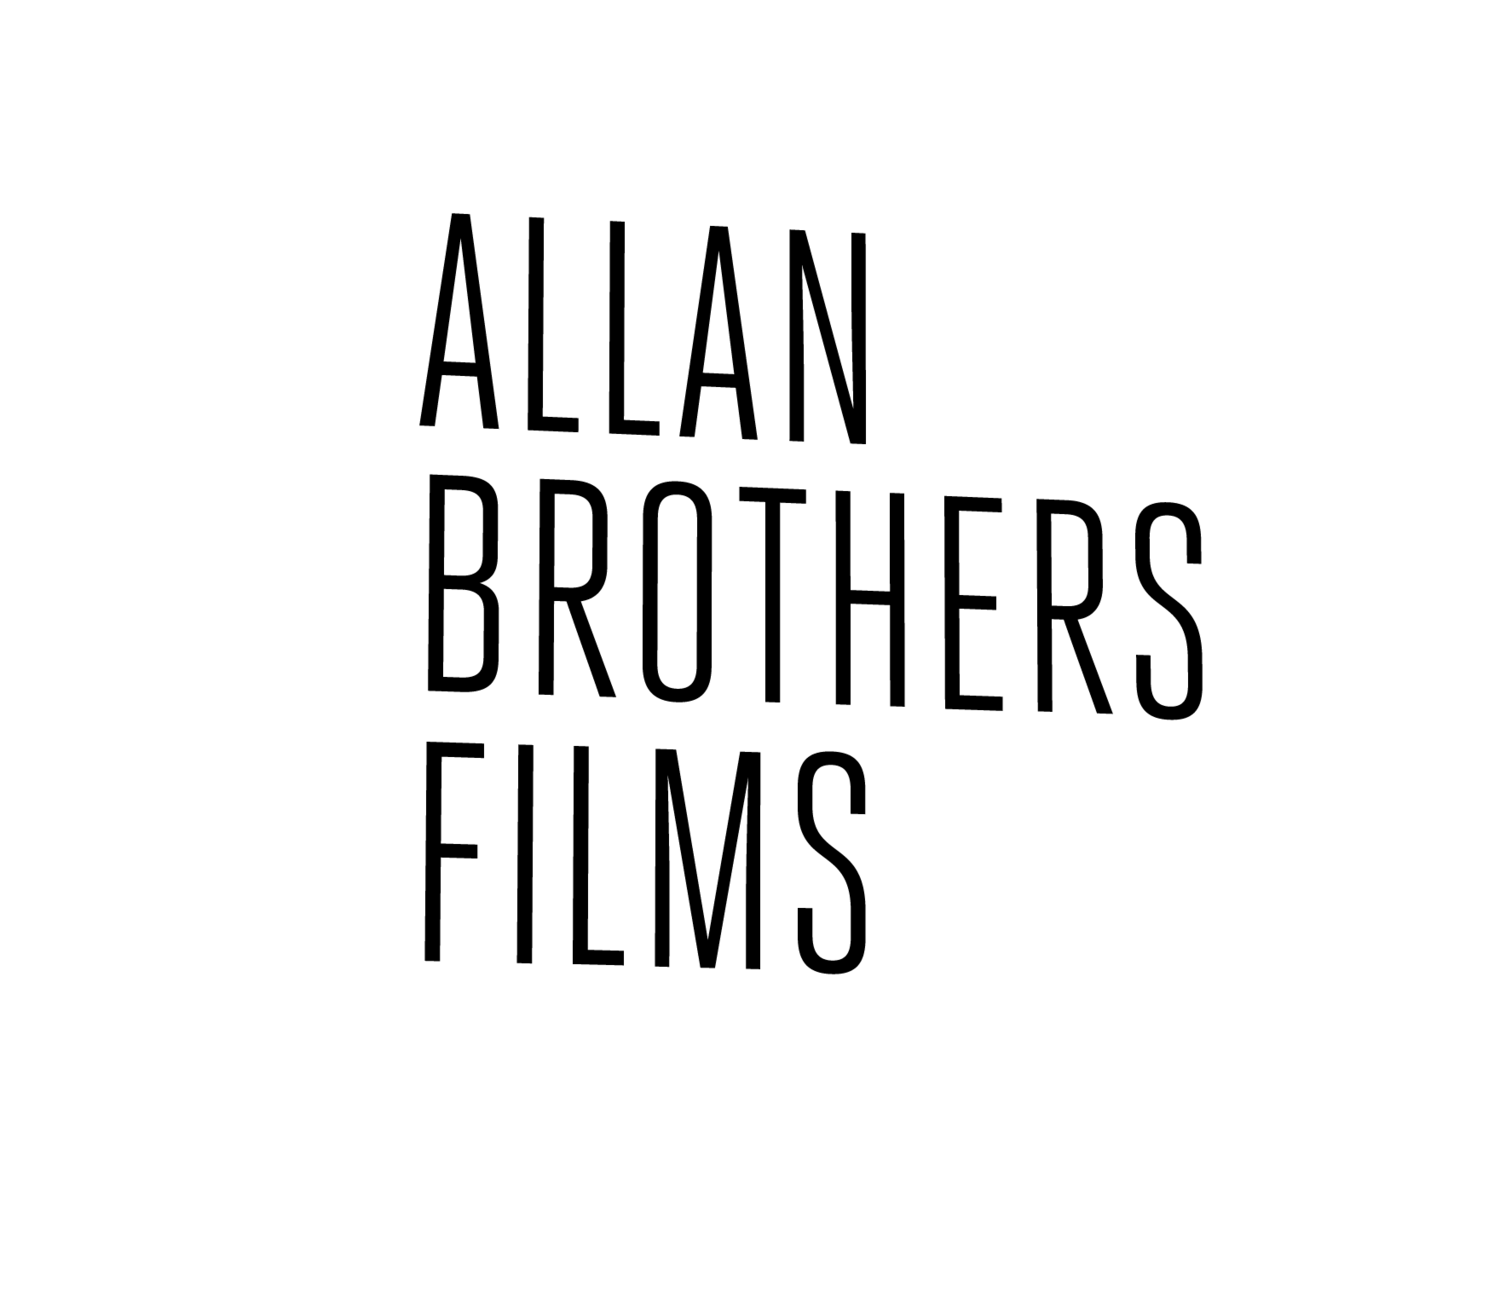 ALLAN BROTHERS FILMS